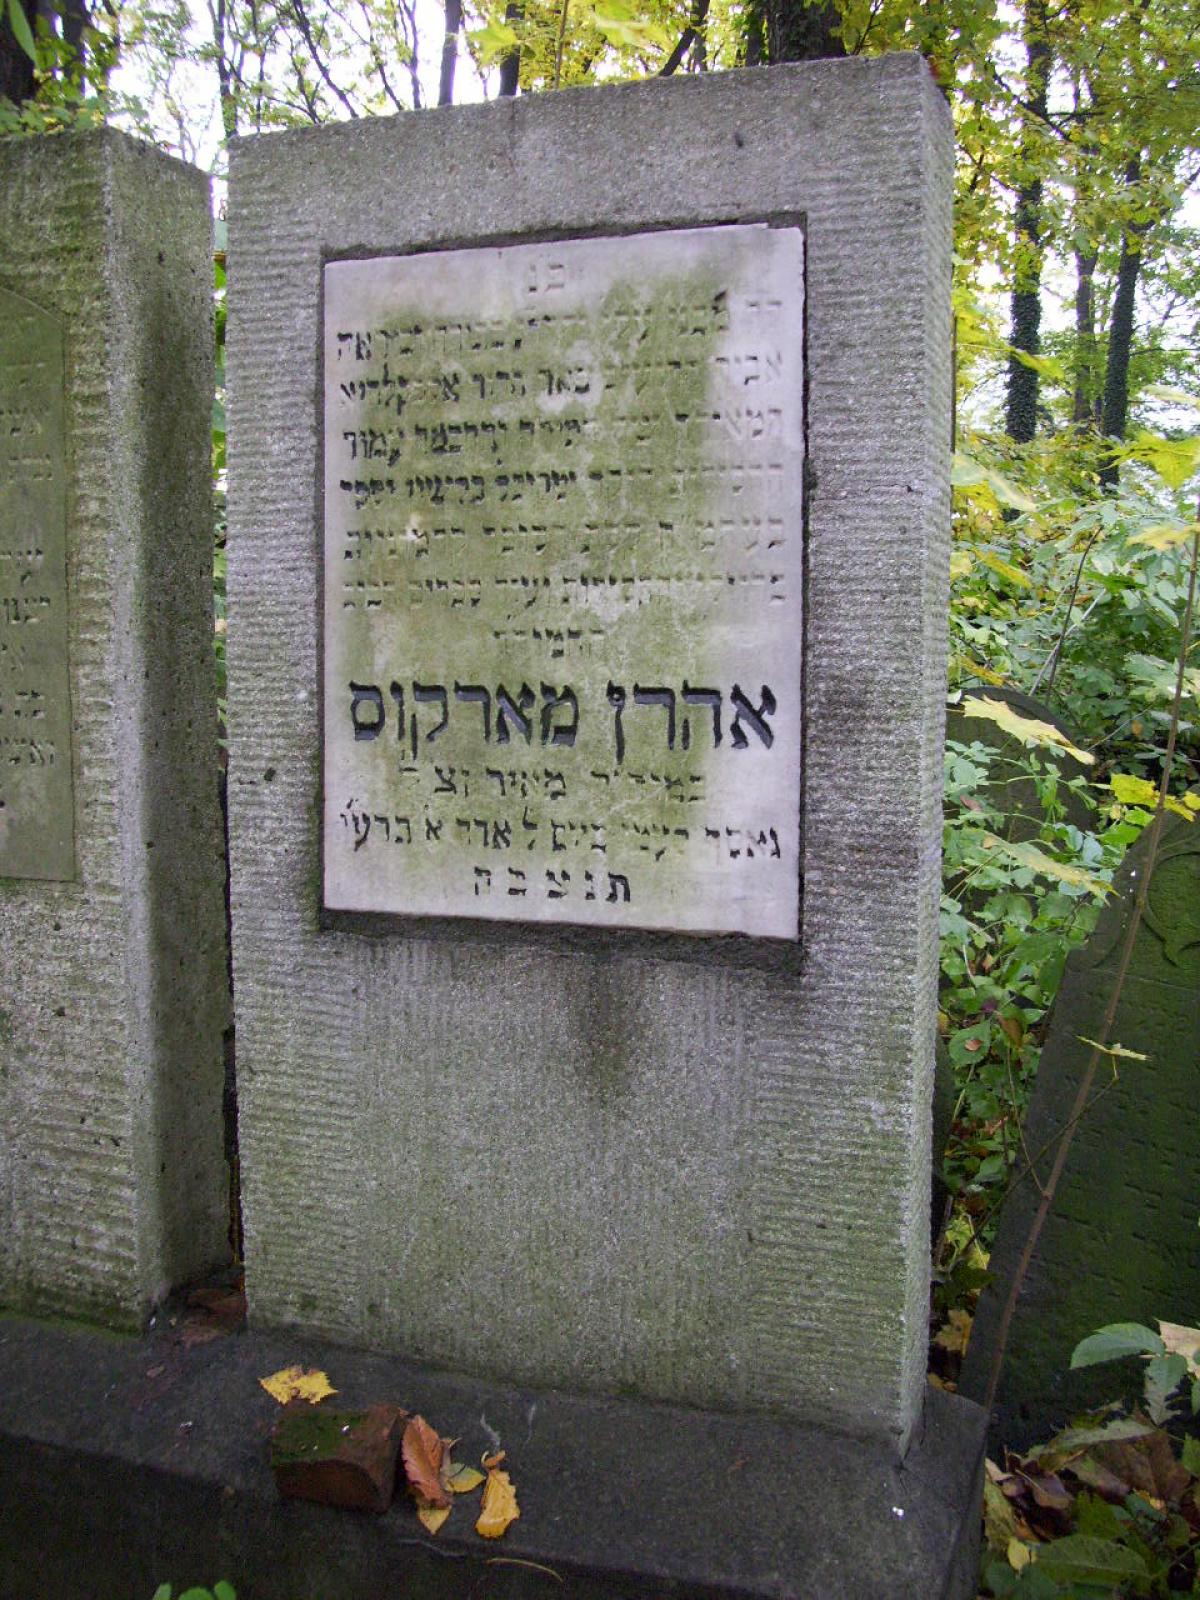 Wikipedia, New Jewish Cemetery in Kraków, Self-published work